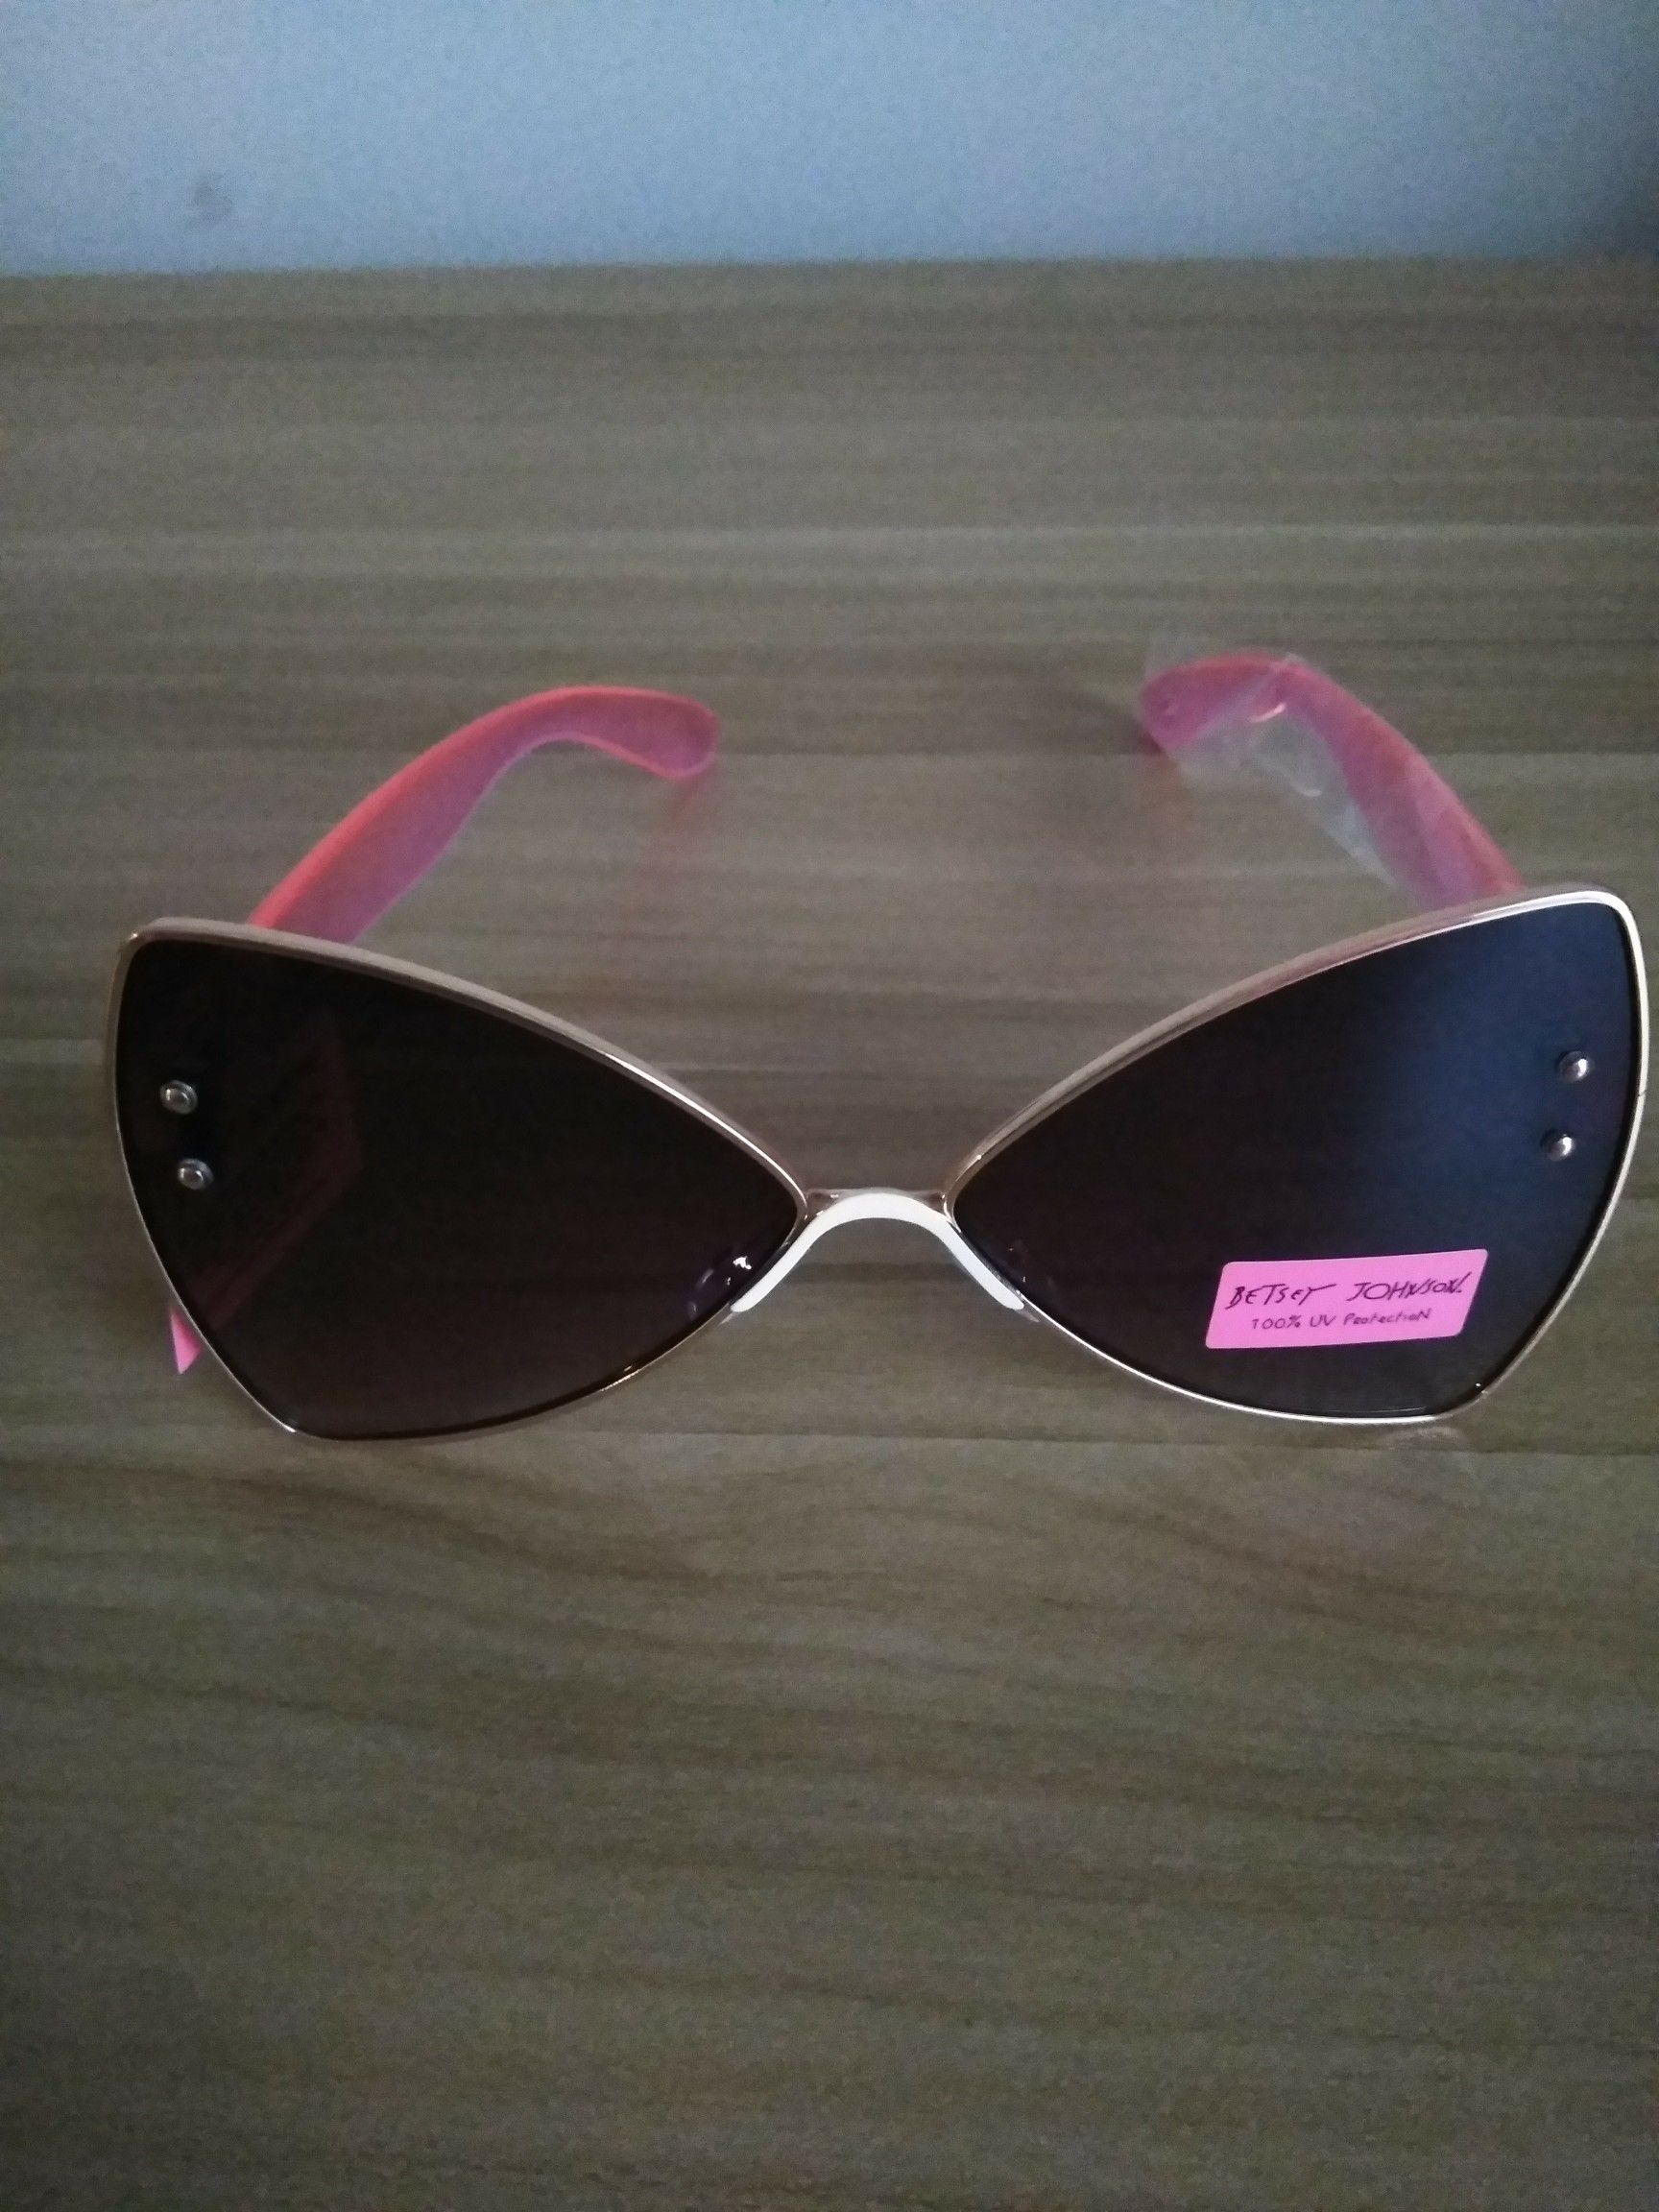 Betsey Johnson Sunglasses